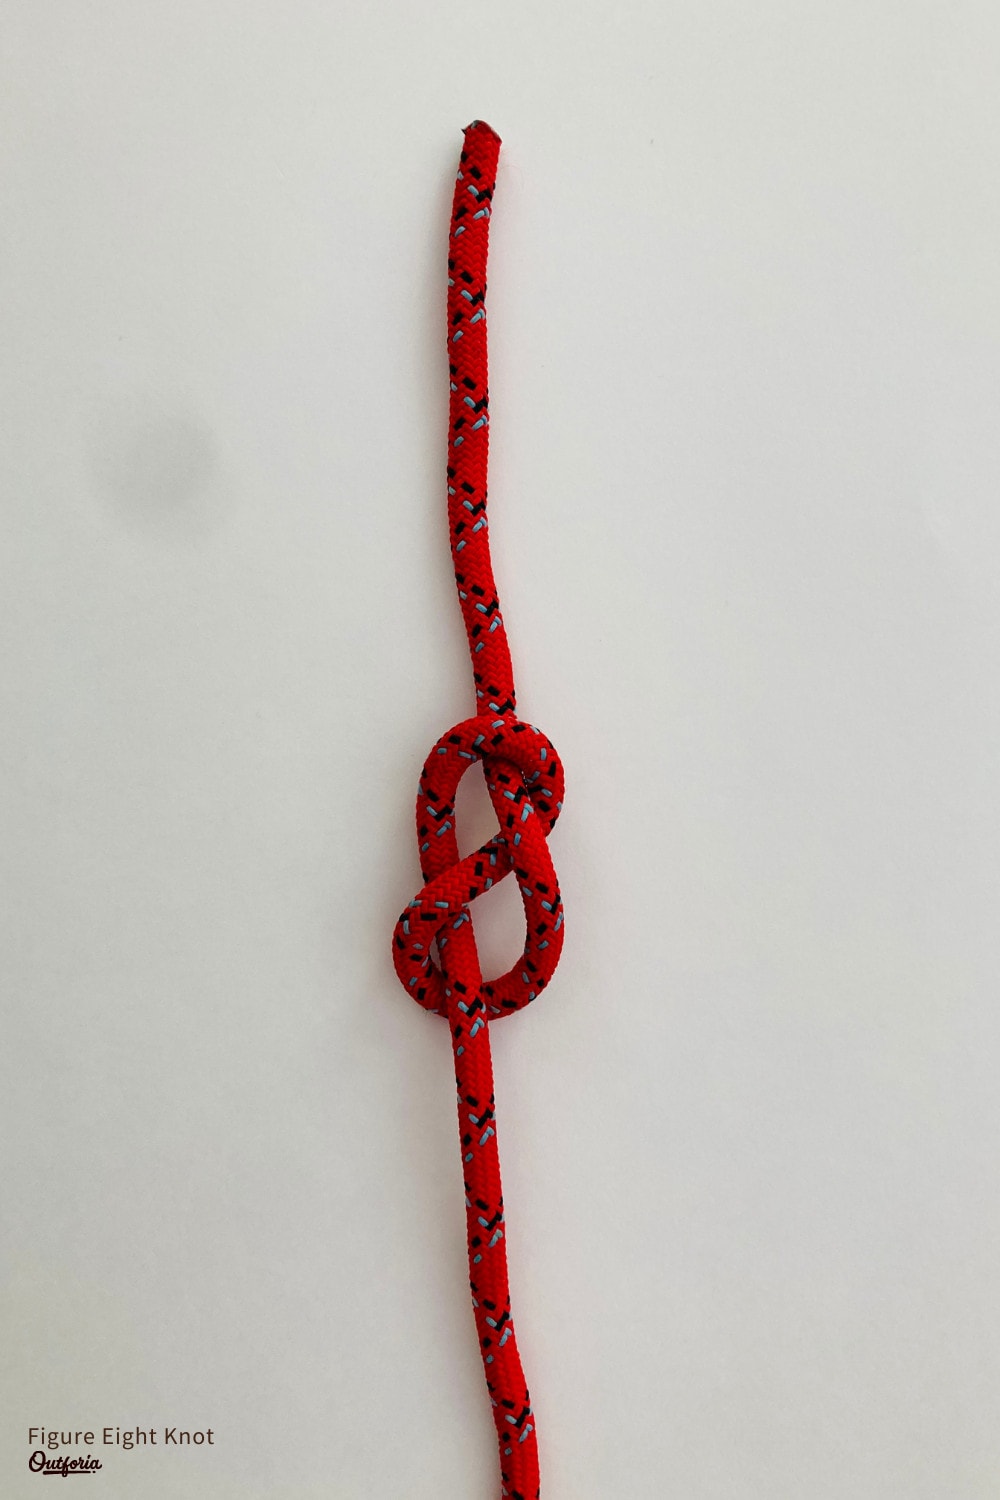 Figure eight knot image